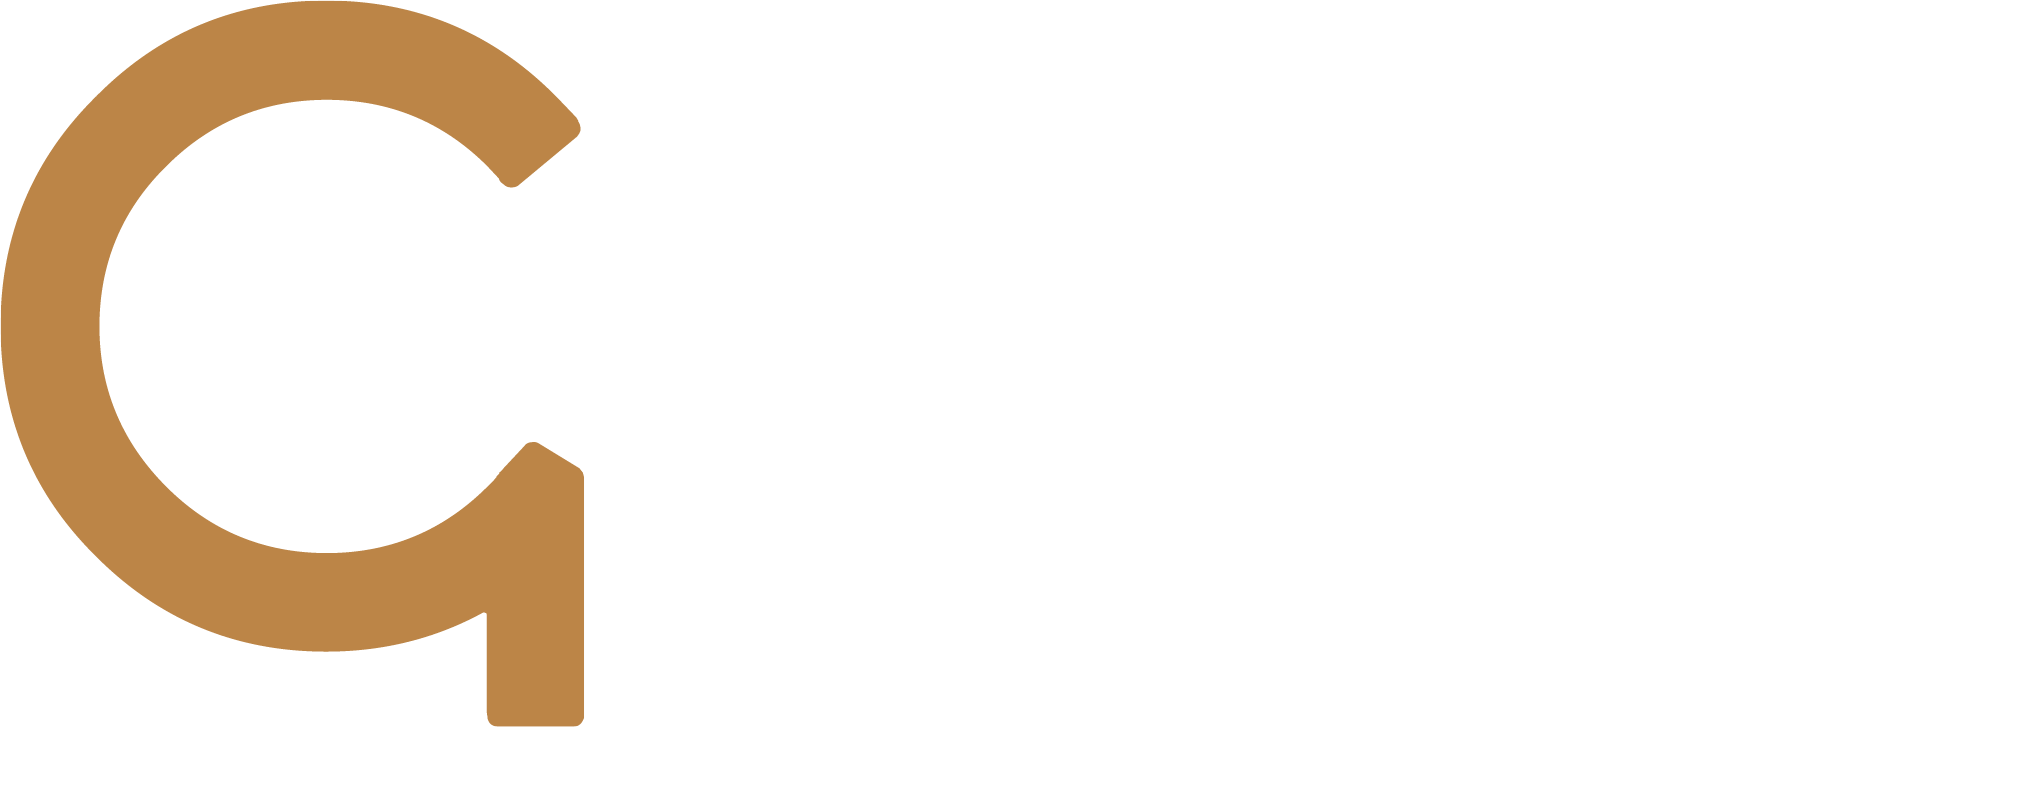 Callerton Academy Image